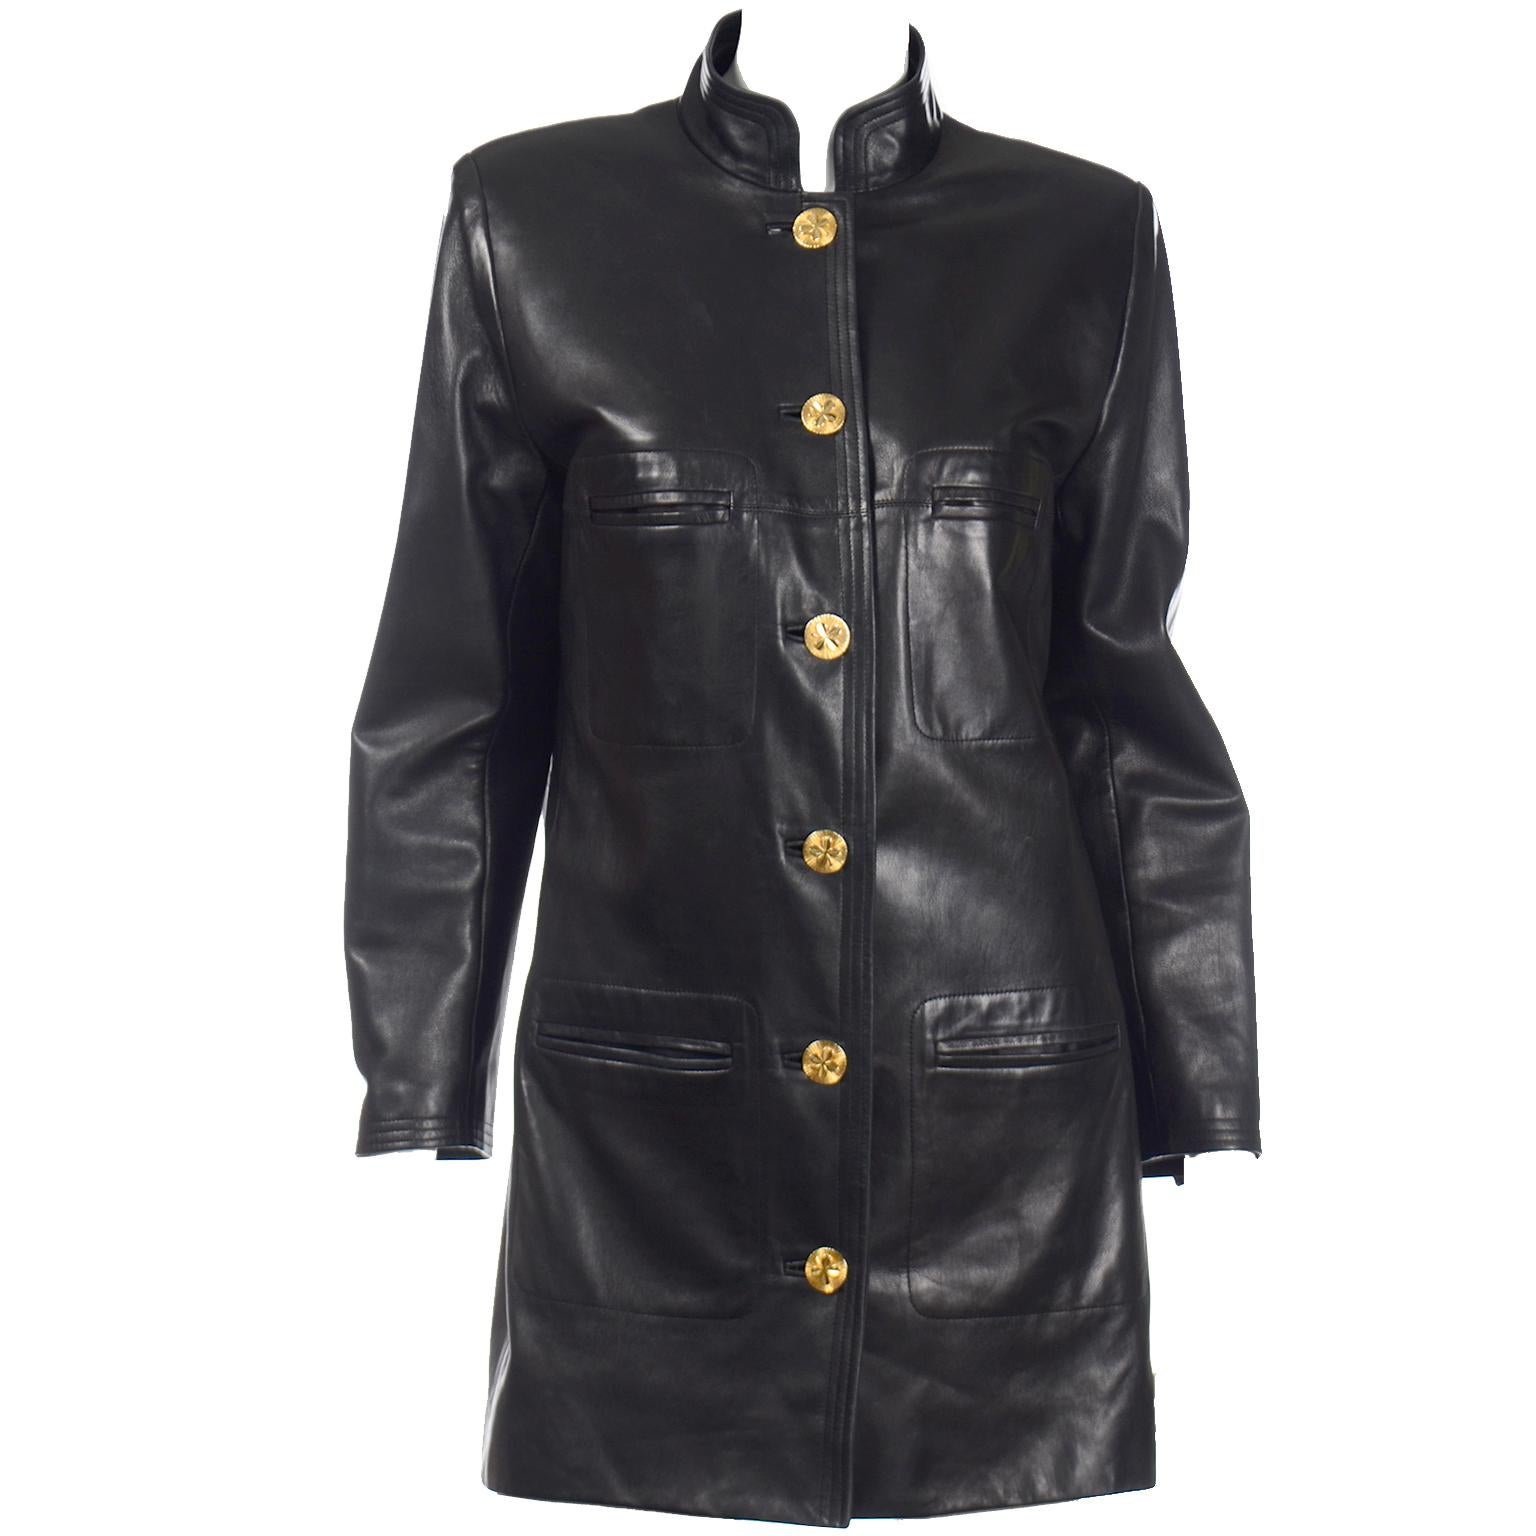 Chanel Vintage Black Leather Jacket with 4 Leaf Clover Gold Buttons 7